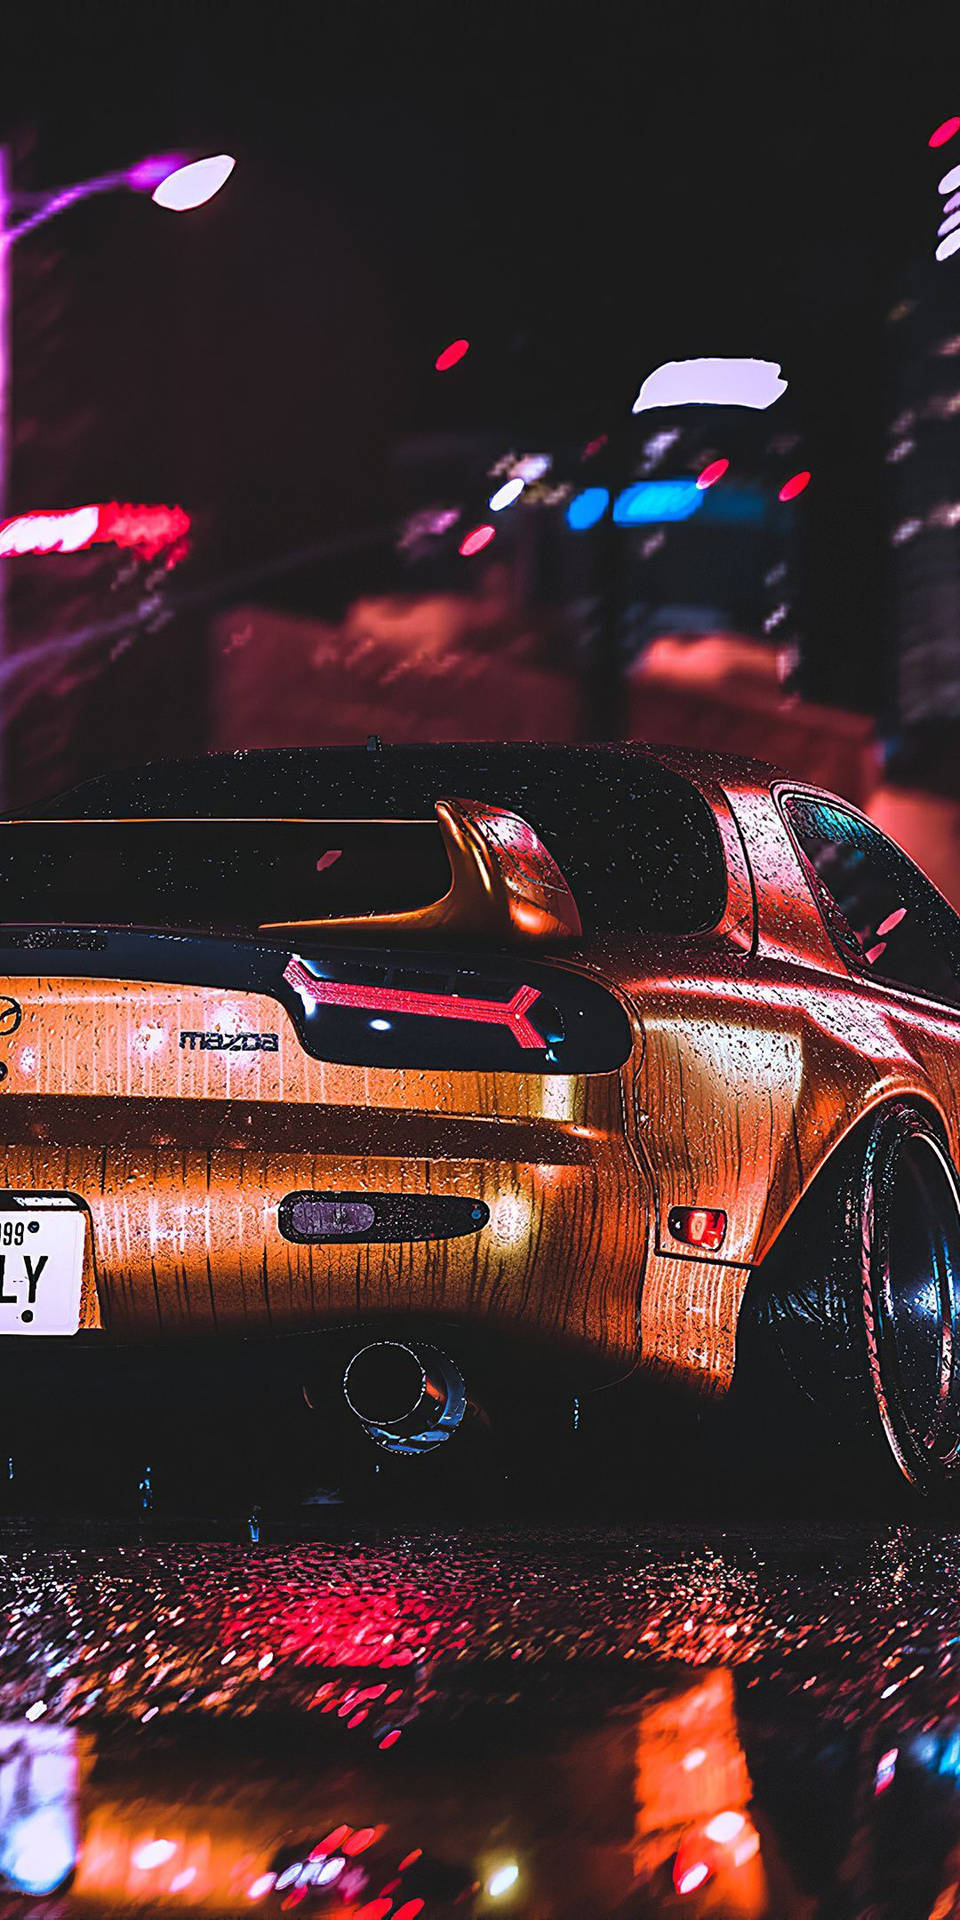 Wet Jdm Car In Night City Background